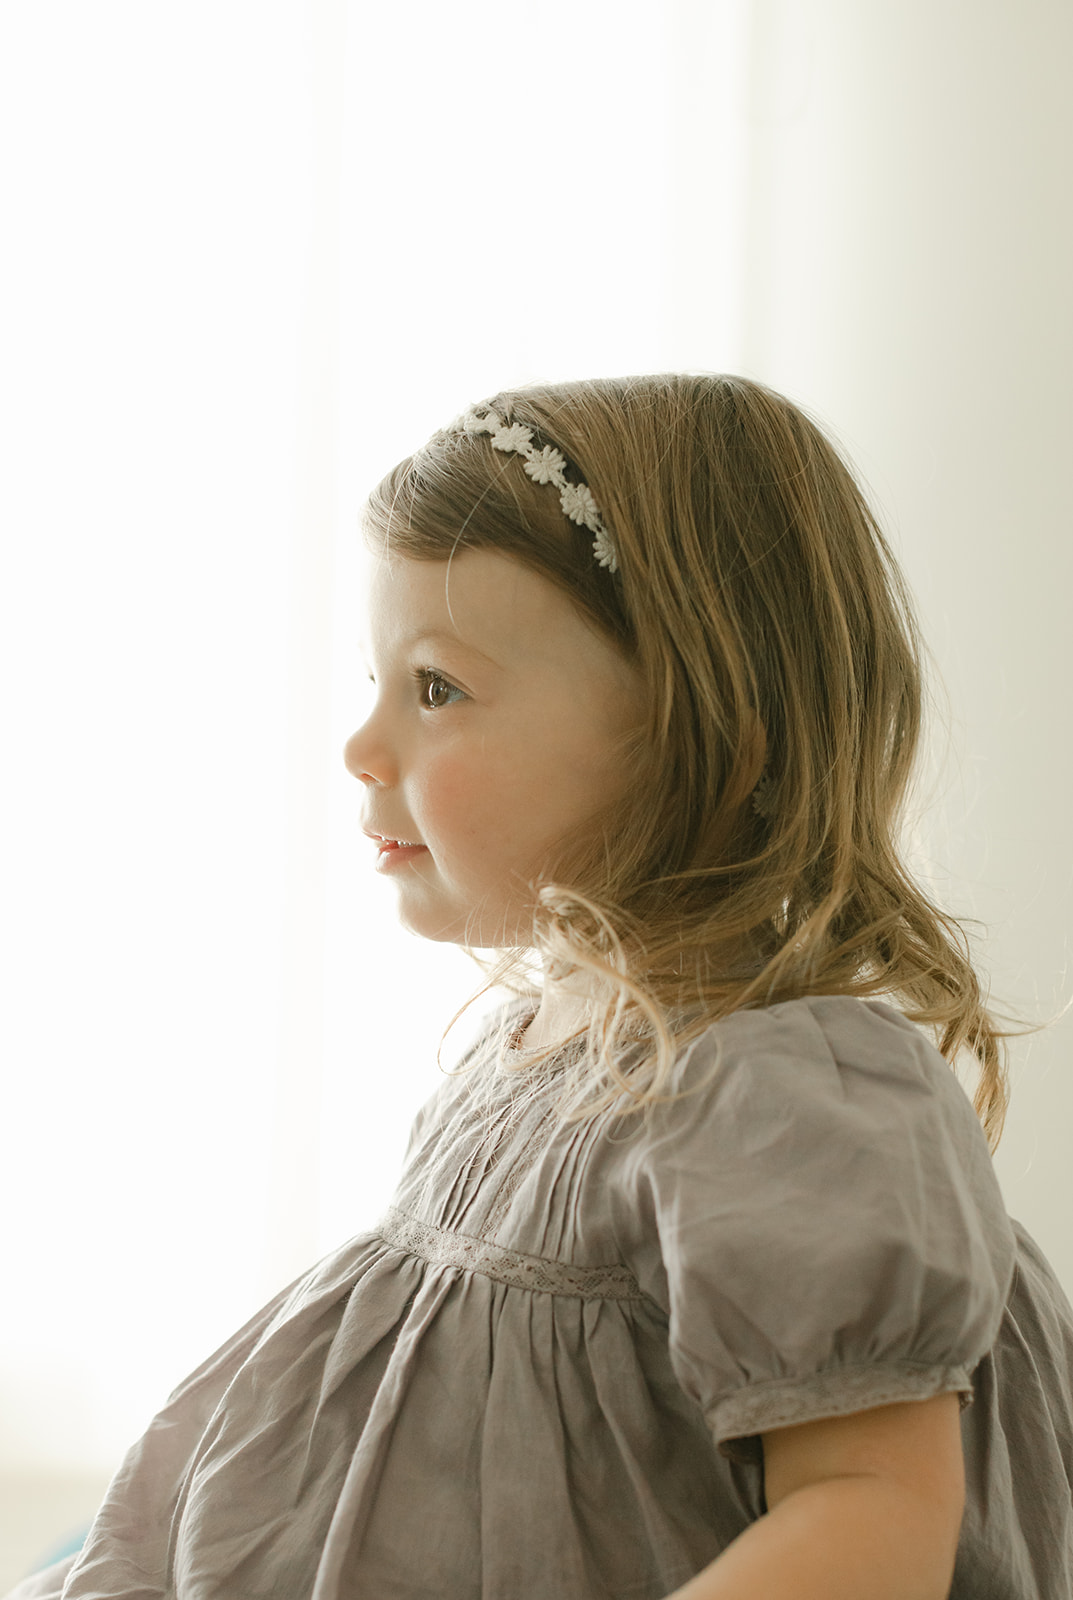 little girl portrait. childhood portrait minis in nashville